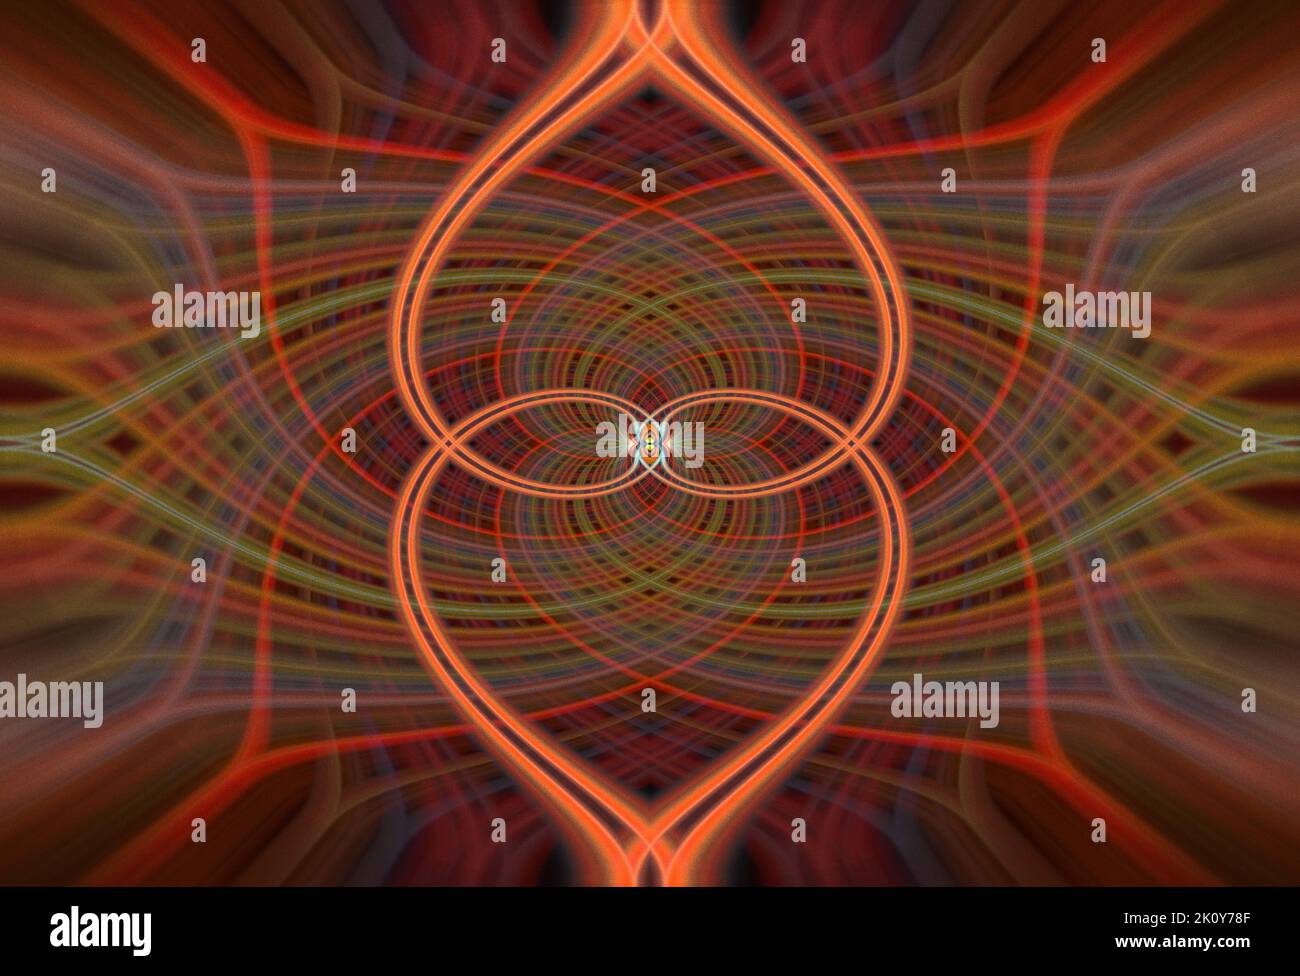 Digital art, 3d illustration. Symmetrical abstract red and orange fractal pattern Stock Photo